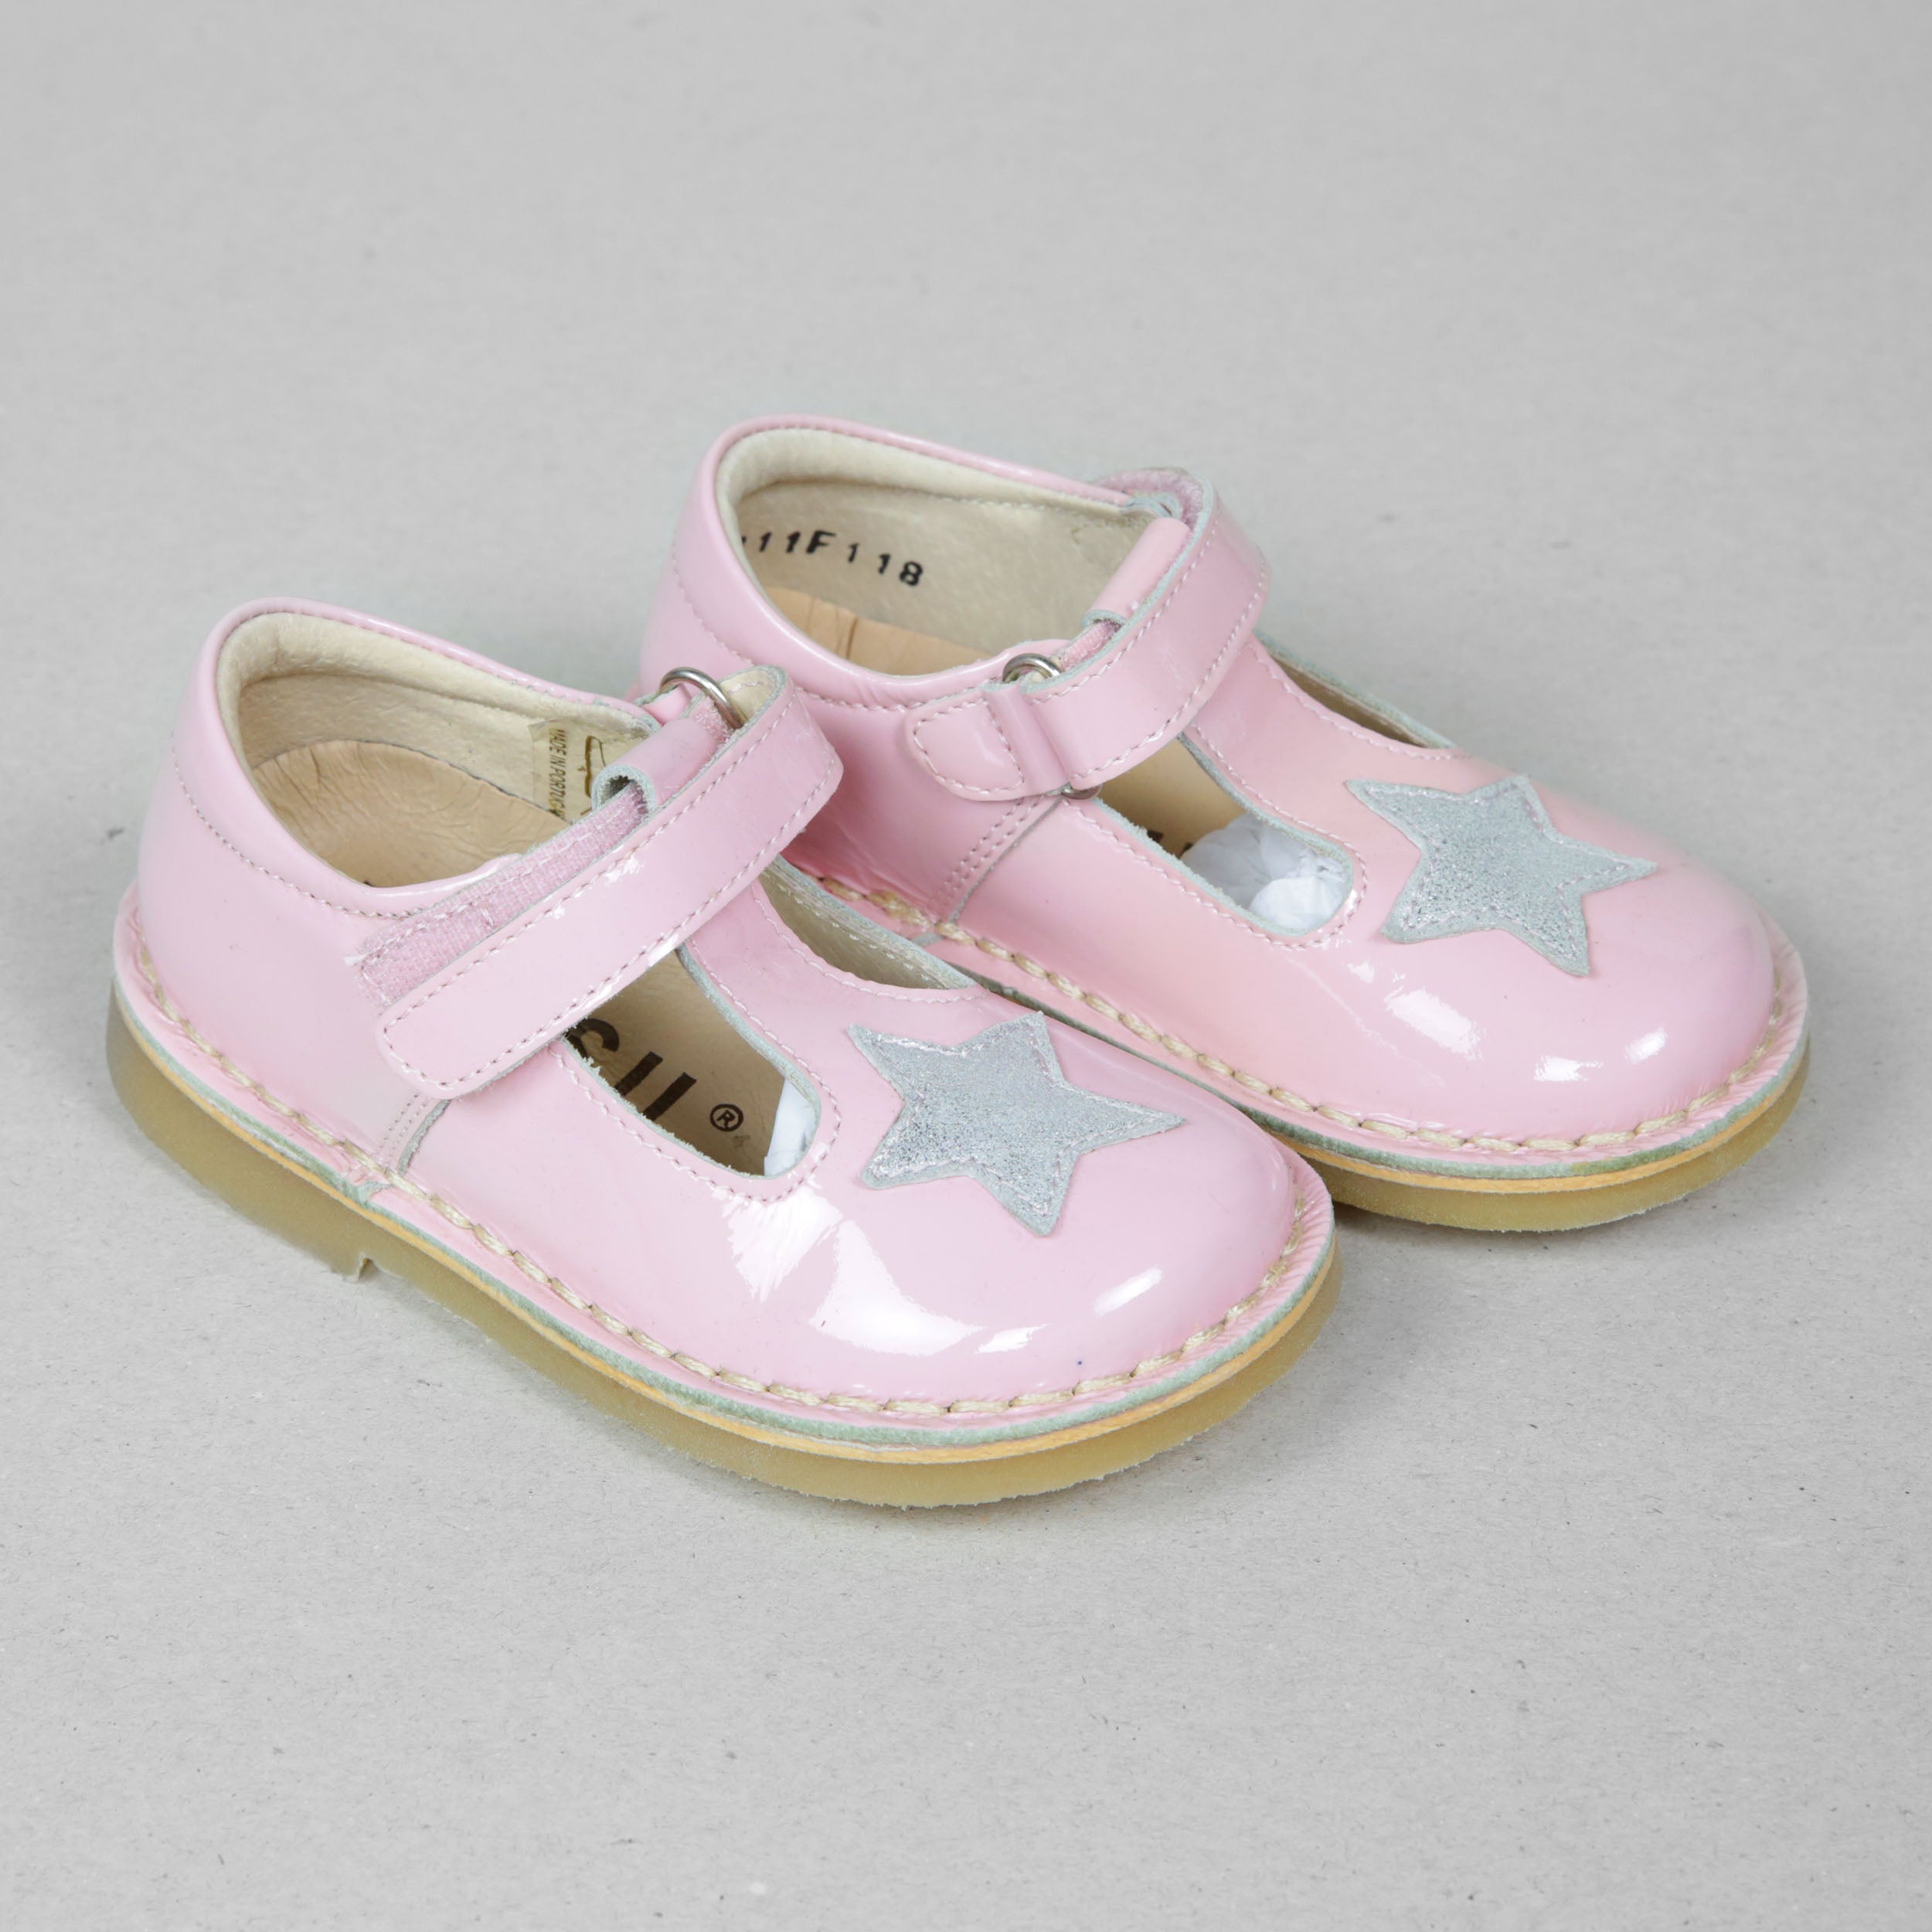 Petasil Creuza Kids Girls Pink Patent Leather Buckle Shoes